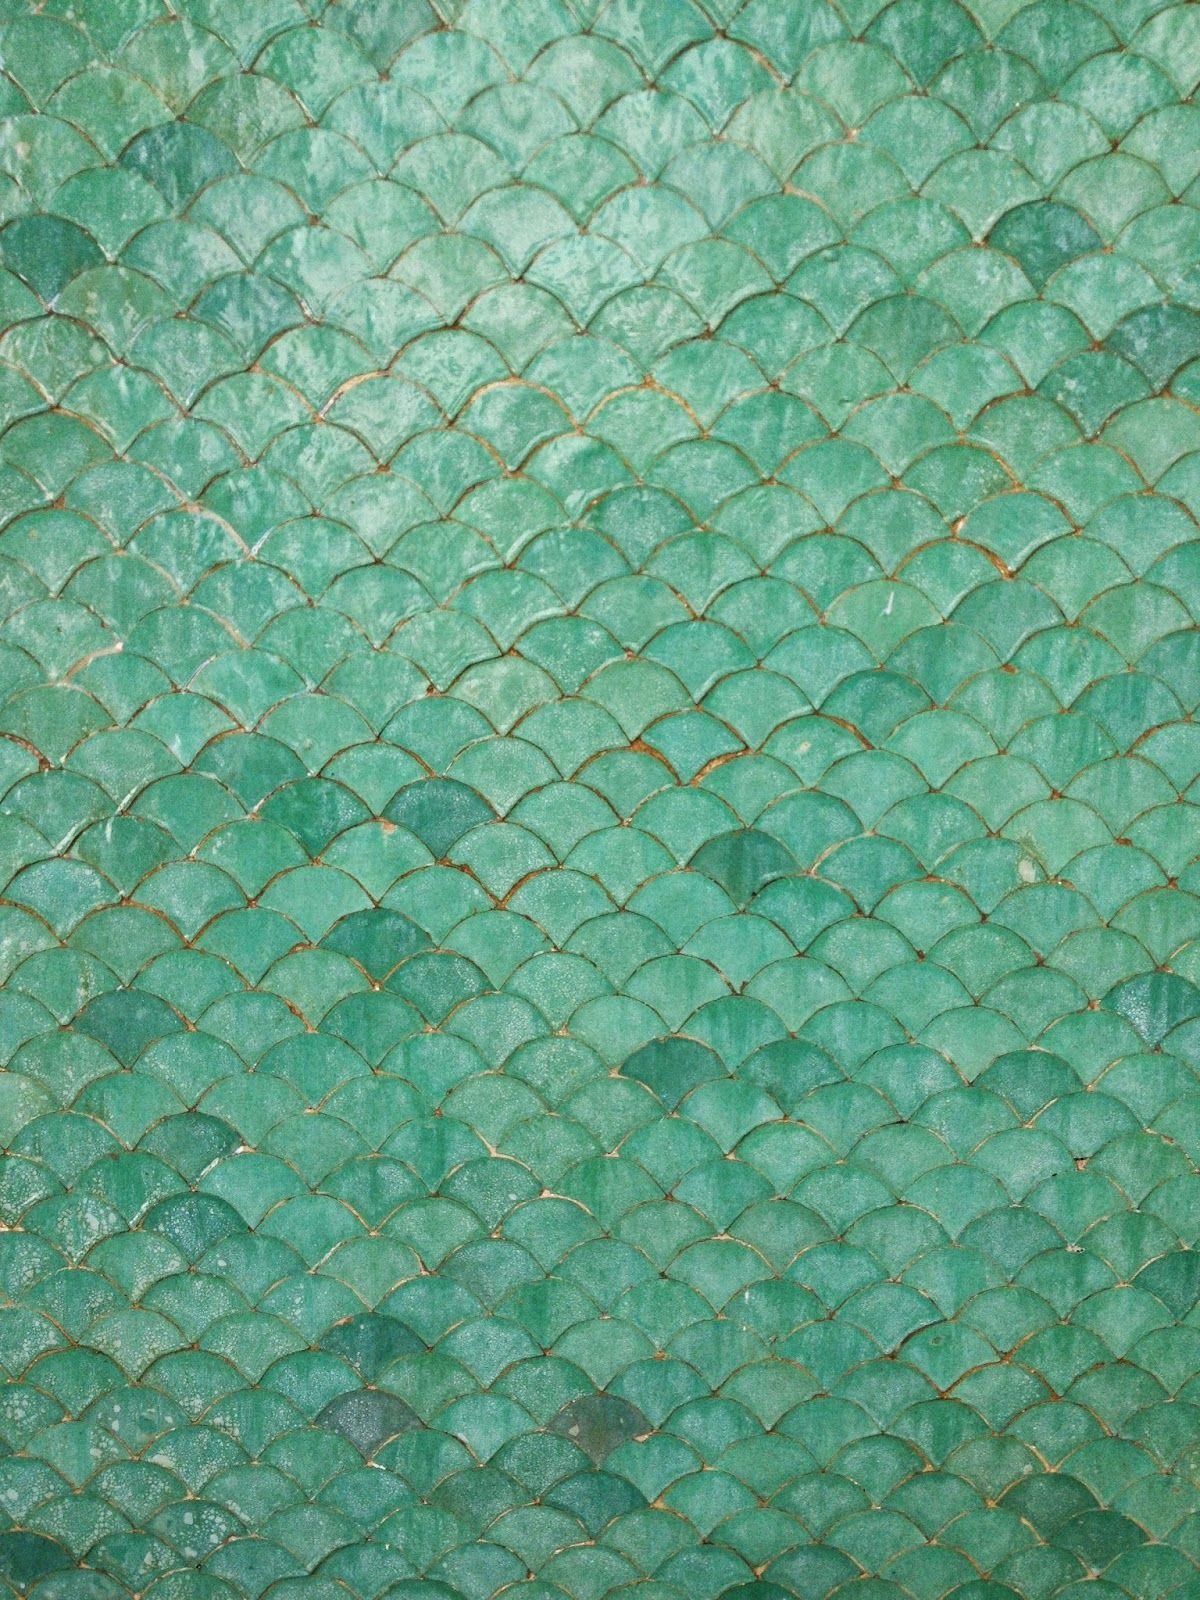 Mermaid Scales Wallpapers Wallpaper Cave Afalchi Free images wallpape [afalchi.blogspot.com]